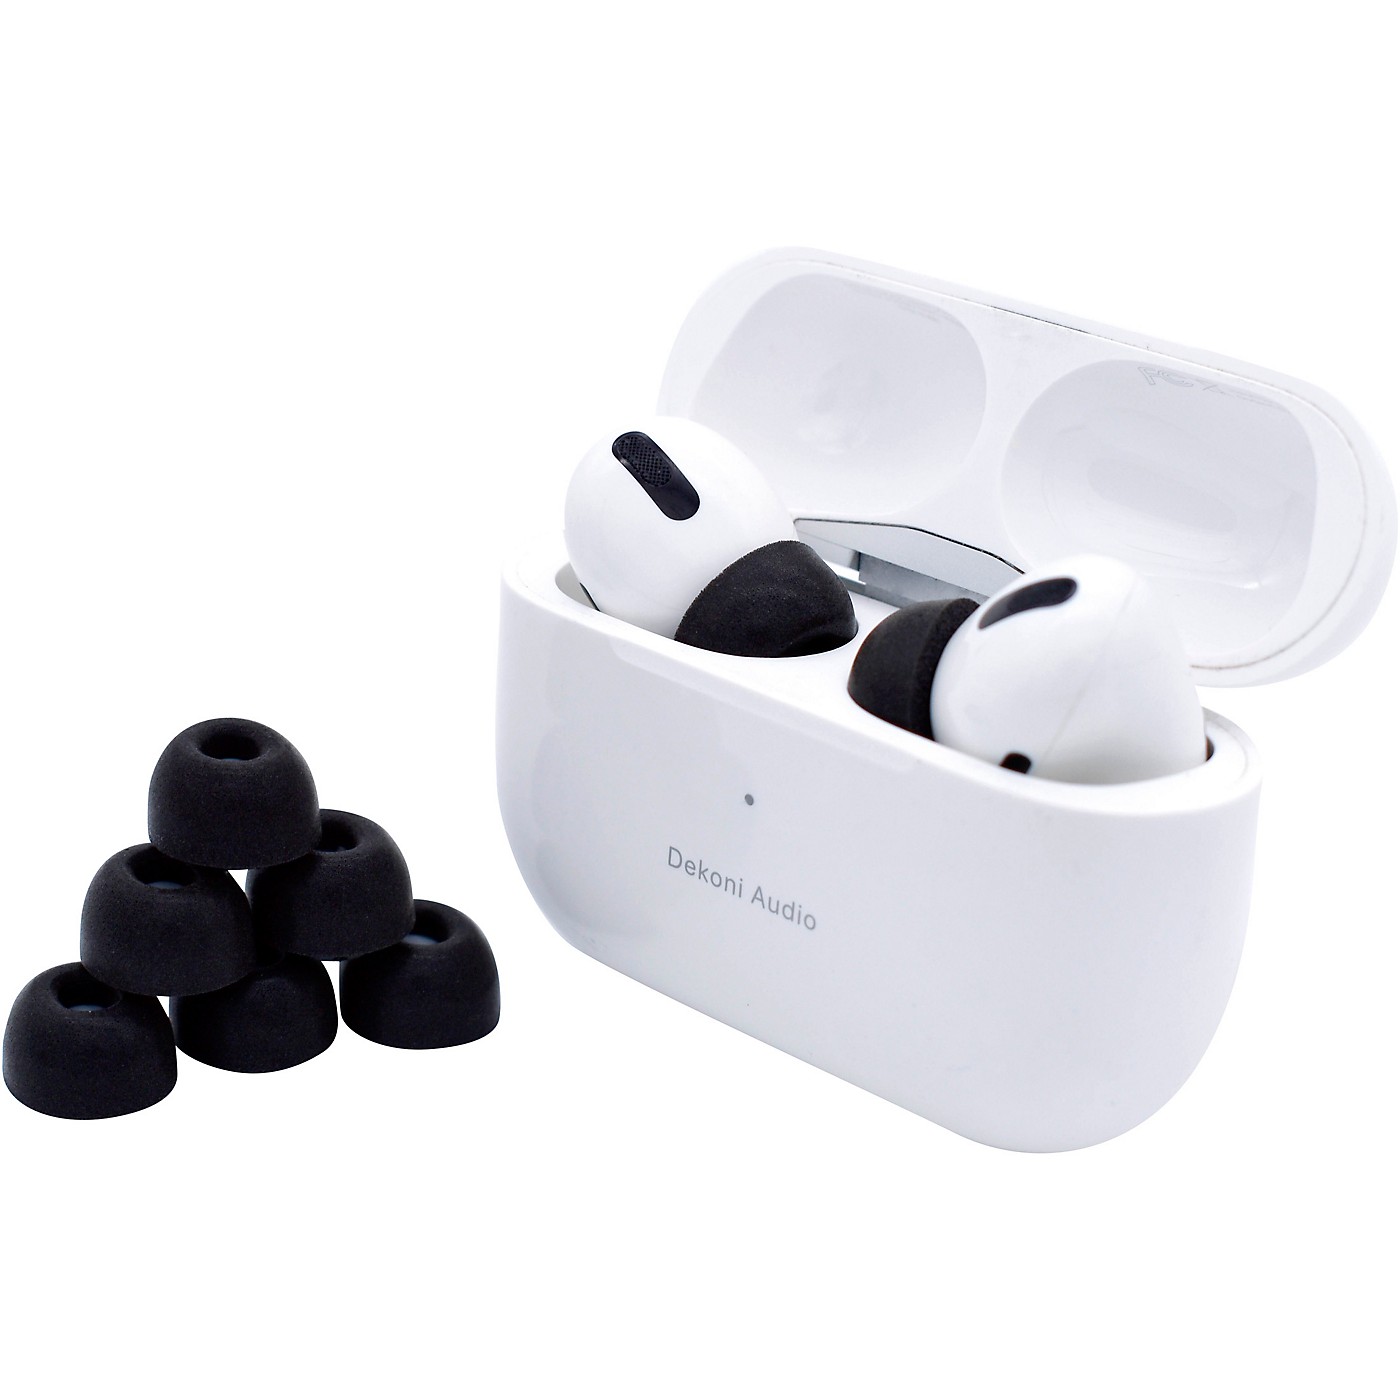 Dekoni Audio Premium Airpods Pro Memory Foam Isolation Earphone Tips black - Sample 3 Pack (SM, MED, LRG) thumbnail